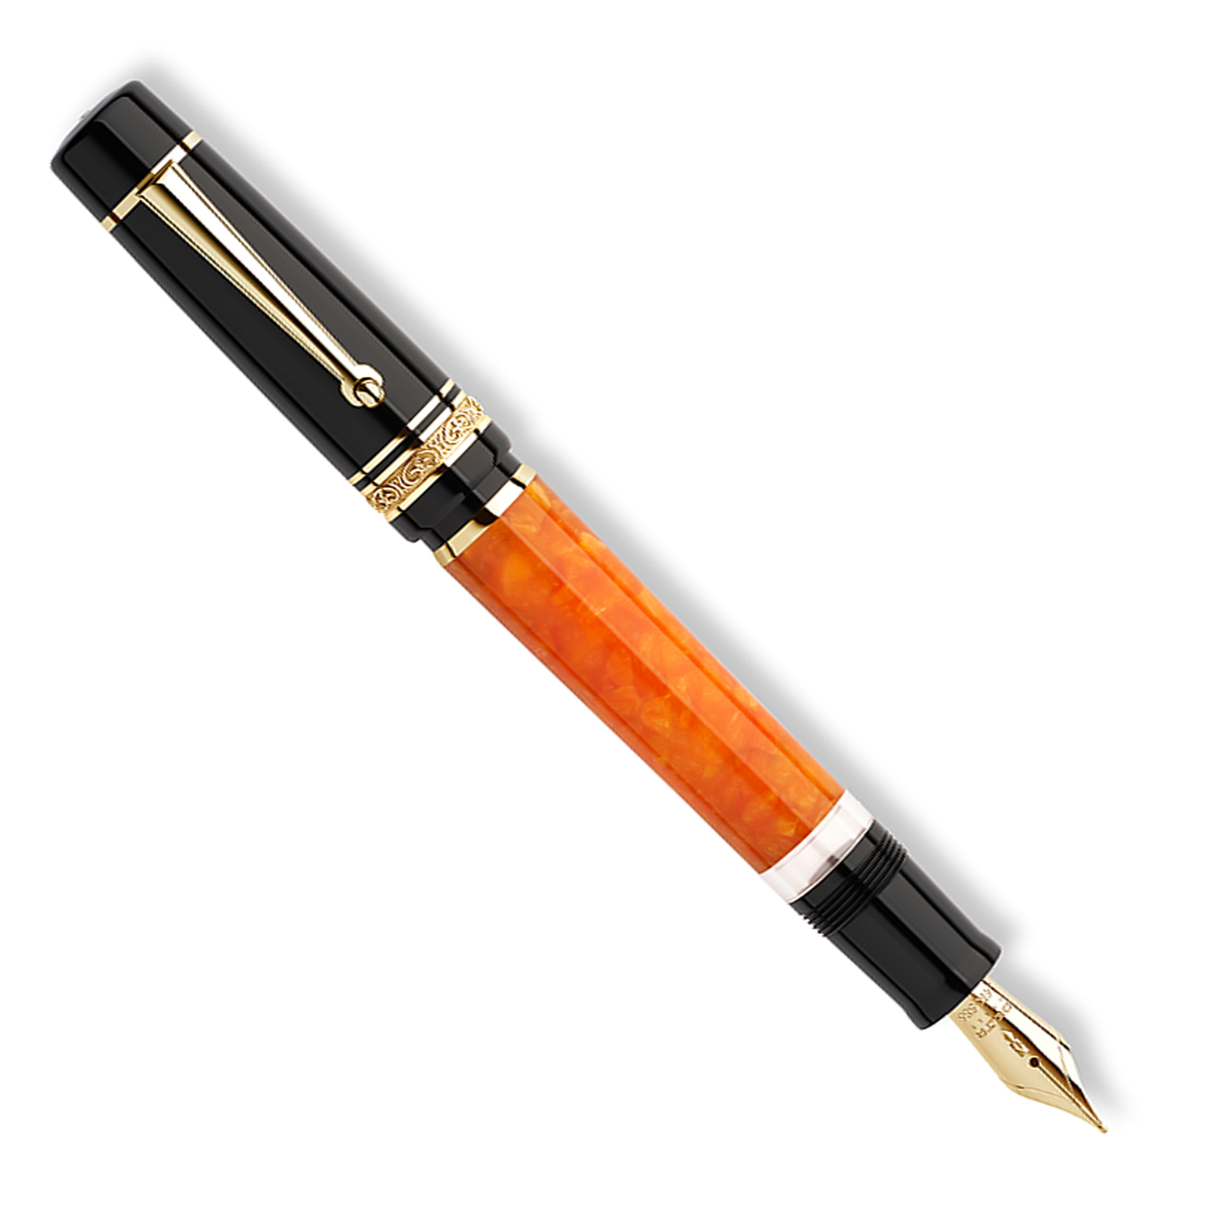 Delta DV Original Mid-Size Gold Trim - Fountain Pen - 14kt Nib